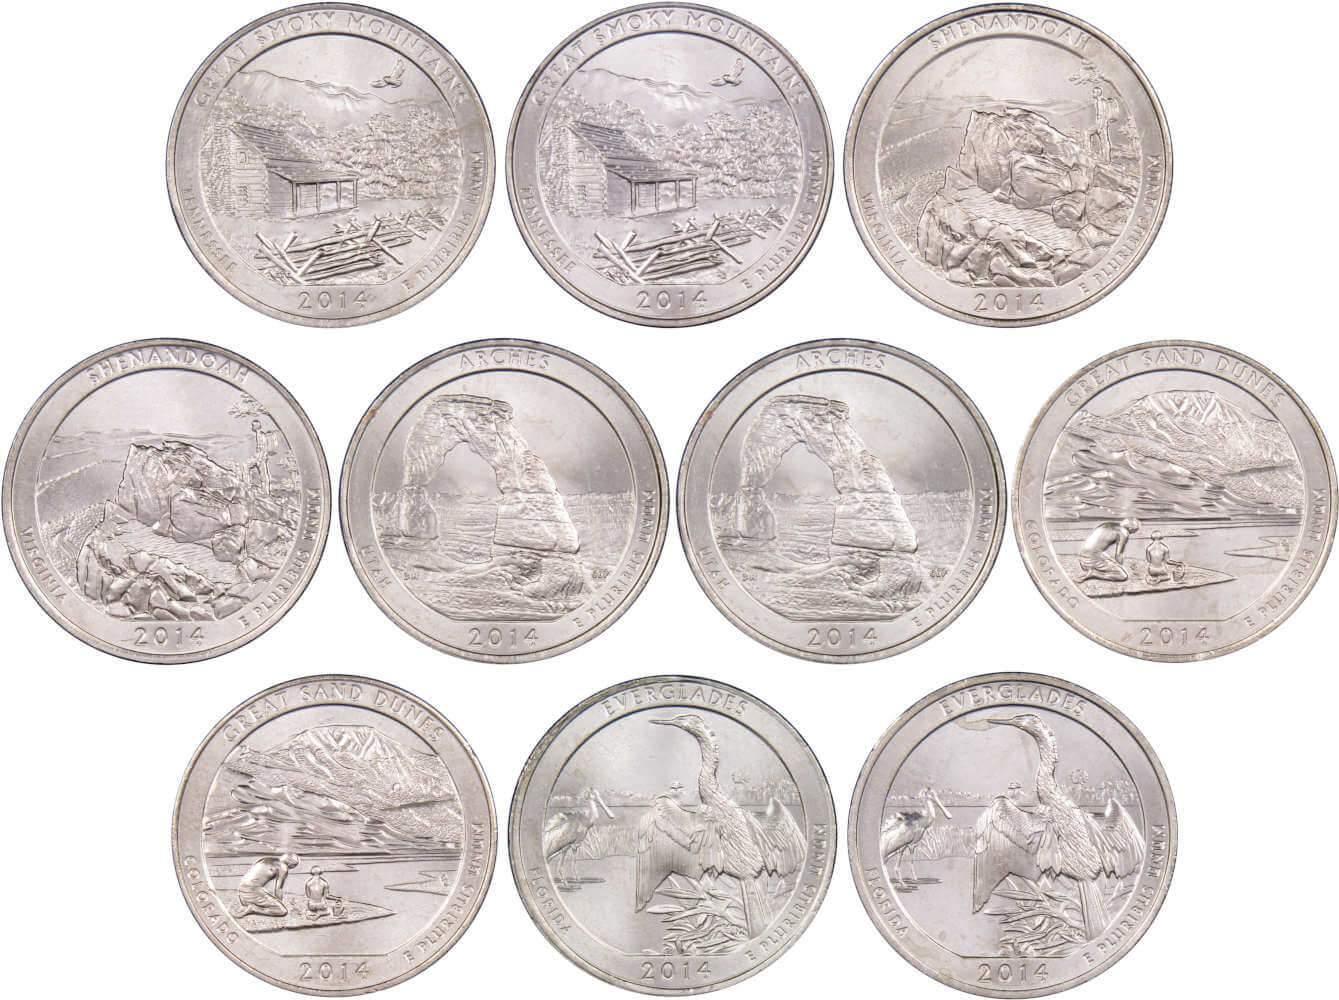 2014 P&D National Park Quarter 10 Coin Set Uncirculated Mint State 25c